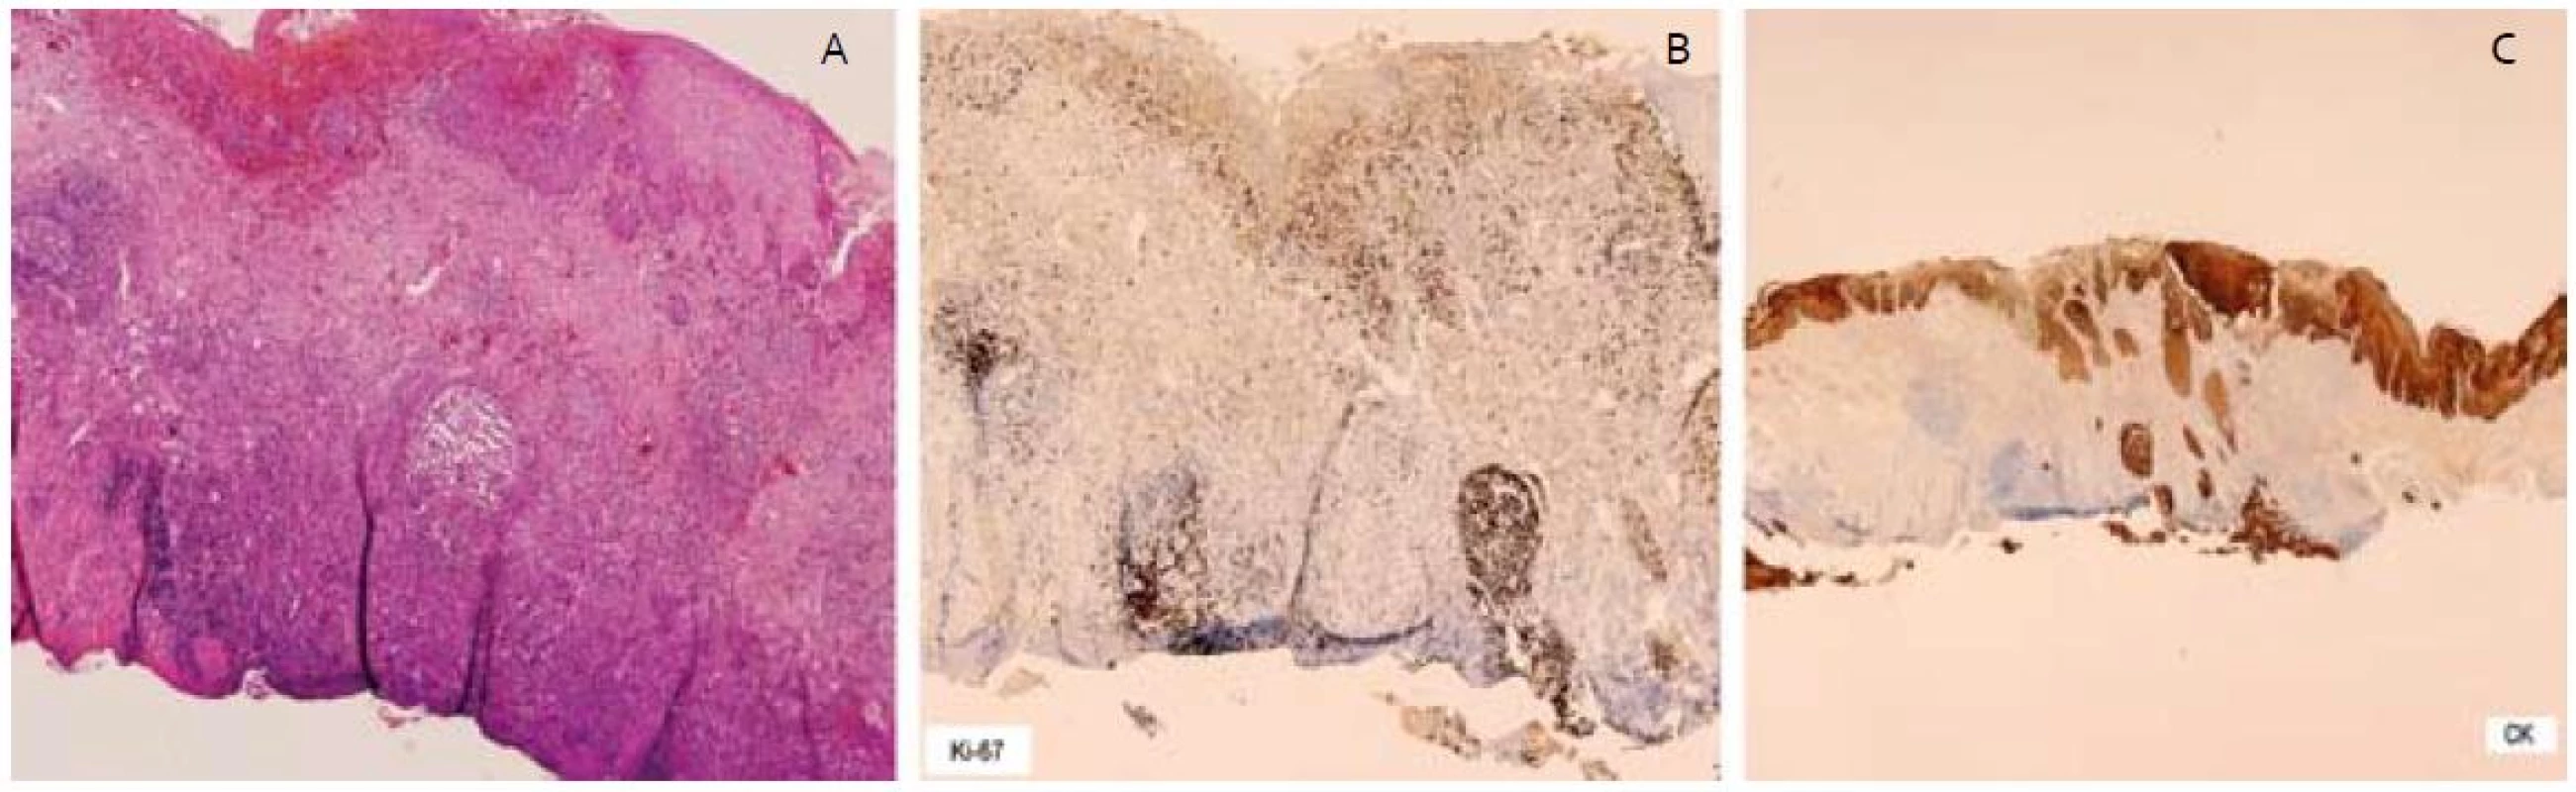 – invadujúce čapy ESCC, B – vysoká proliferačná aktivita Ki-67 v čapoch, C – imunohistochémia – cykeratín, čap dosahujúci spodinu resekátu.
Fig. 4. A – invasive squamous cell carcinoma of esophagus with infiltrating border, B – high proliferative activity of Ki-67, C – cytoceratin immunohistochemical staining, ESCC reached base of resection specimen.